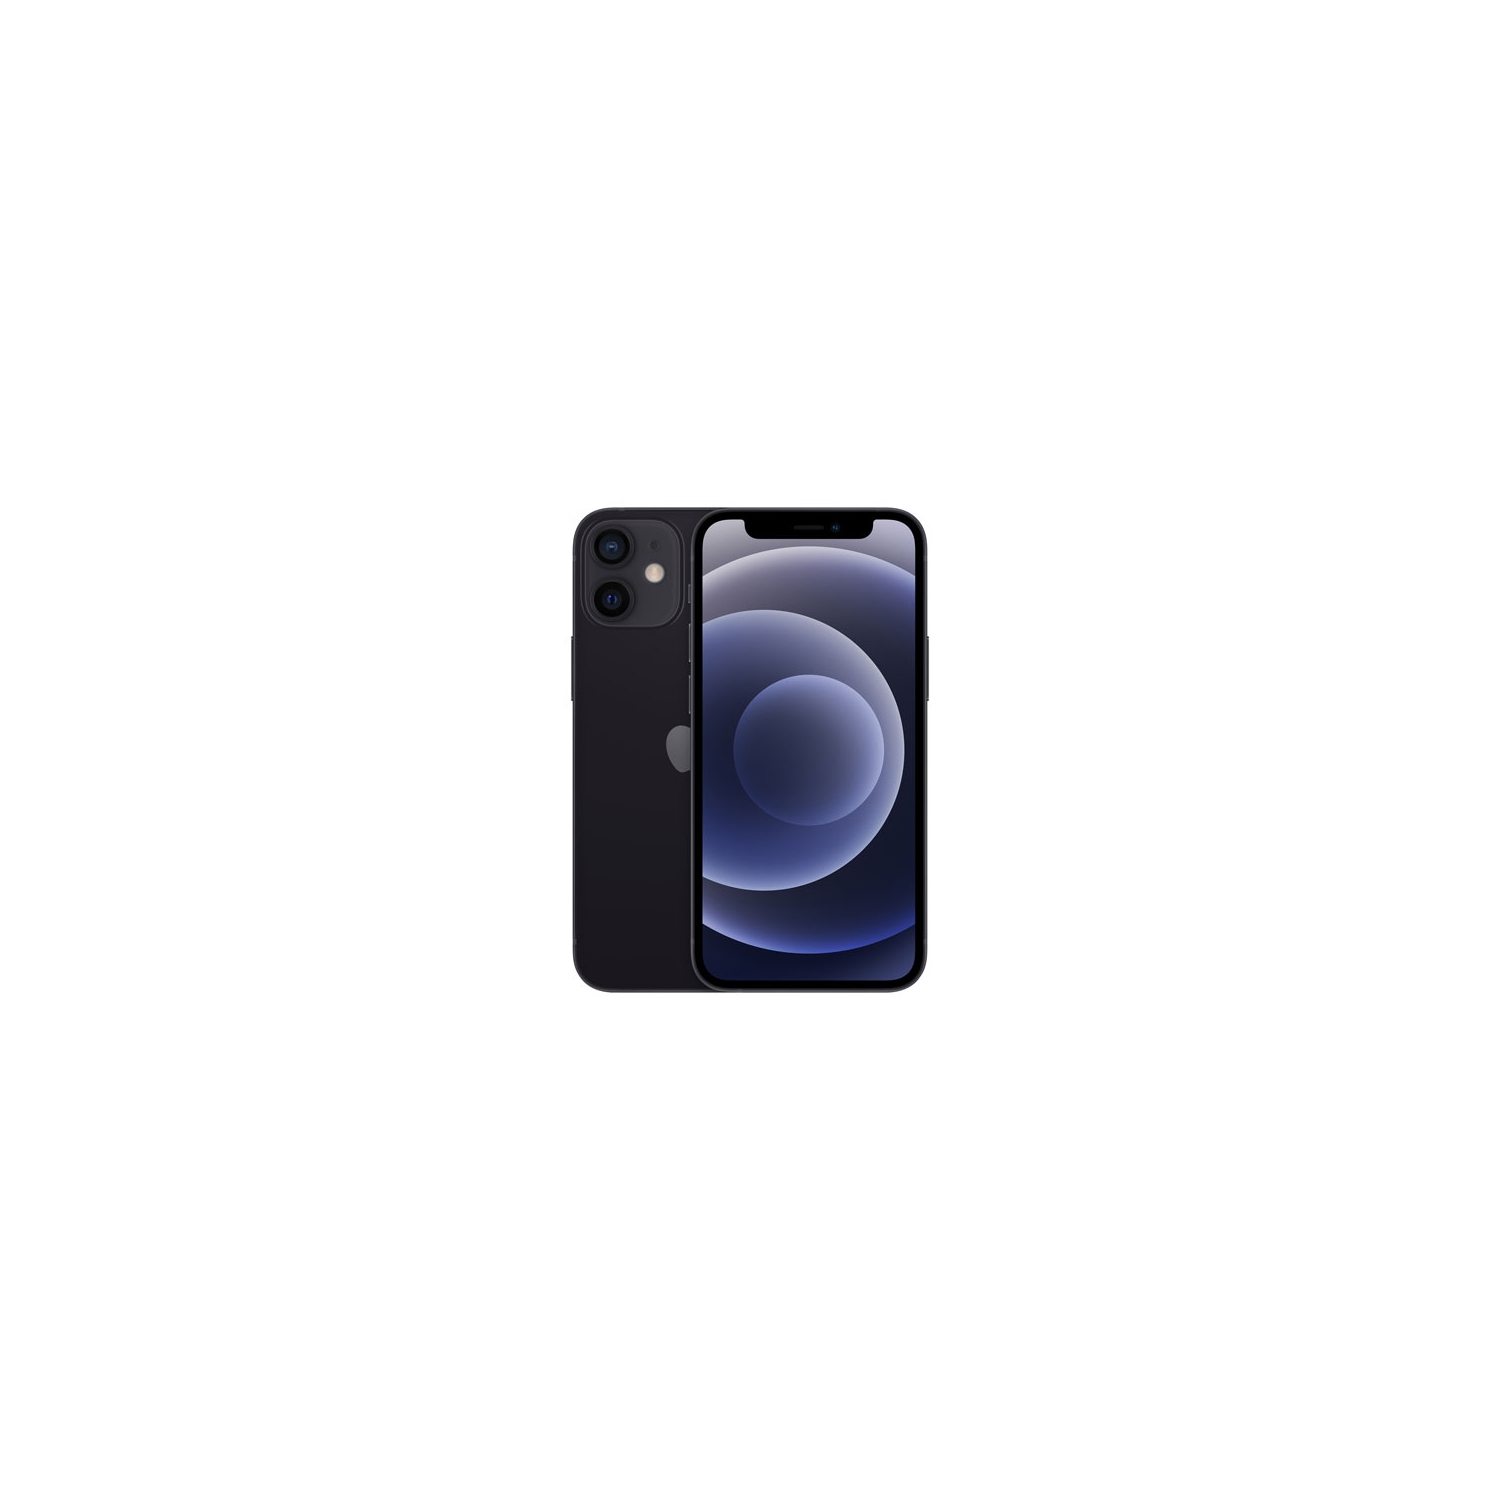 Refurbished (Excellent) - Apple iPhone 12 mini 128GB Smartphone - Black - Unlocked - Certified Refurbished